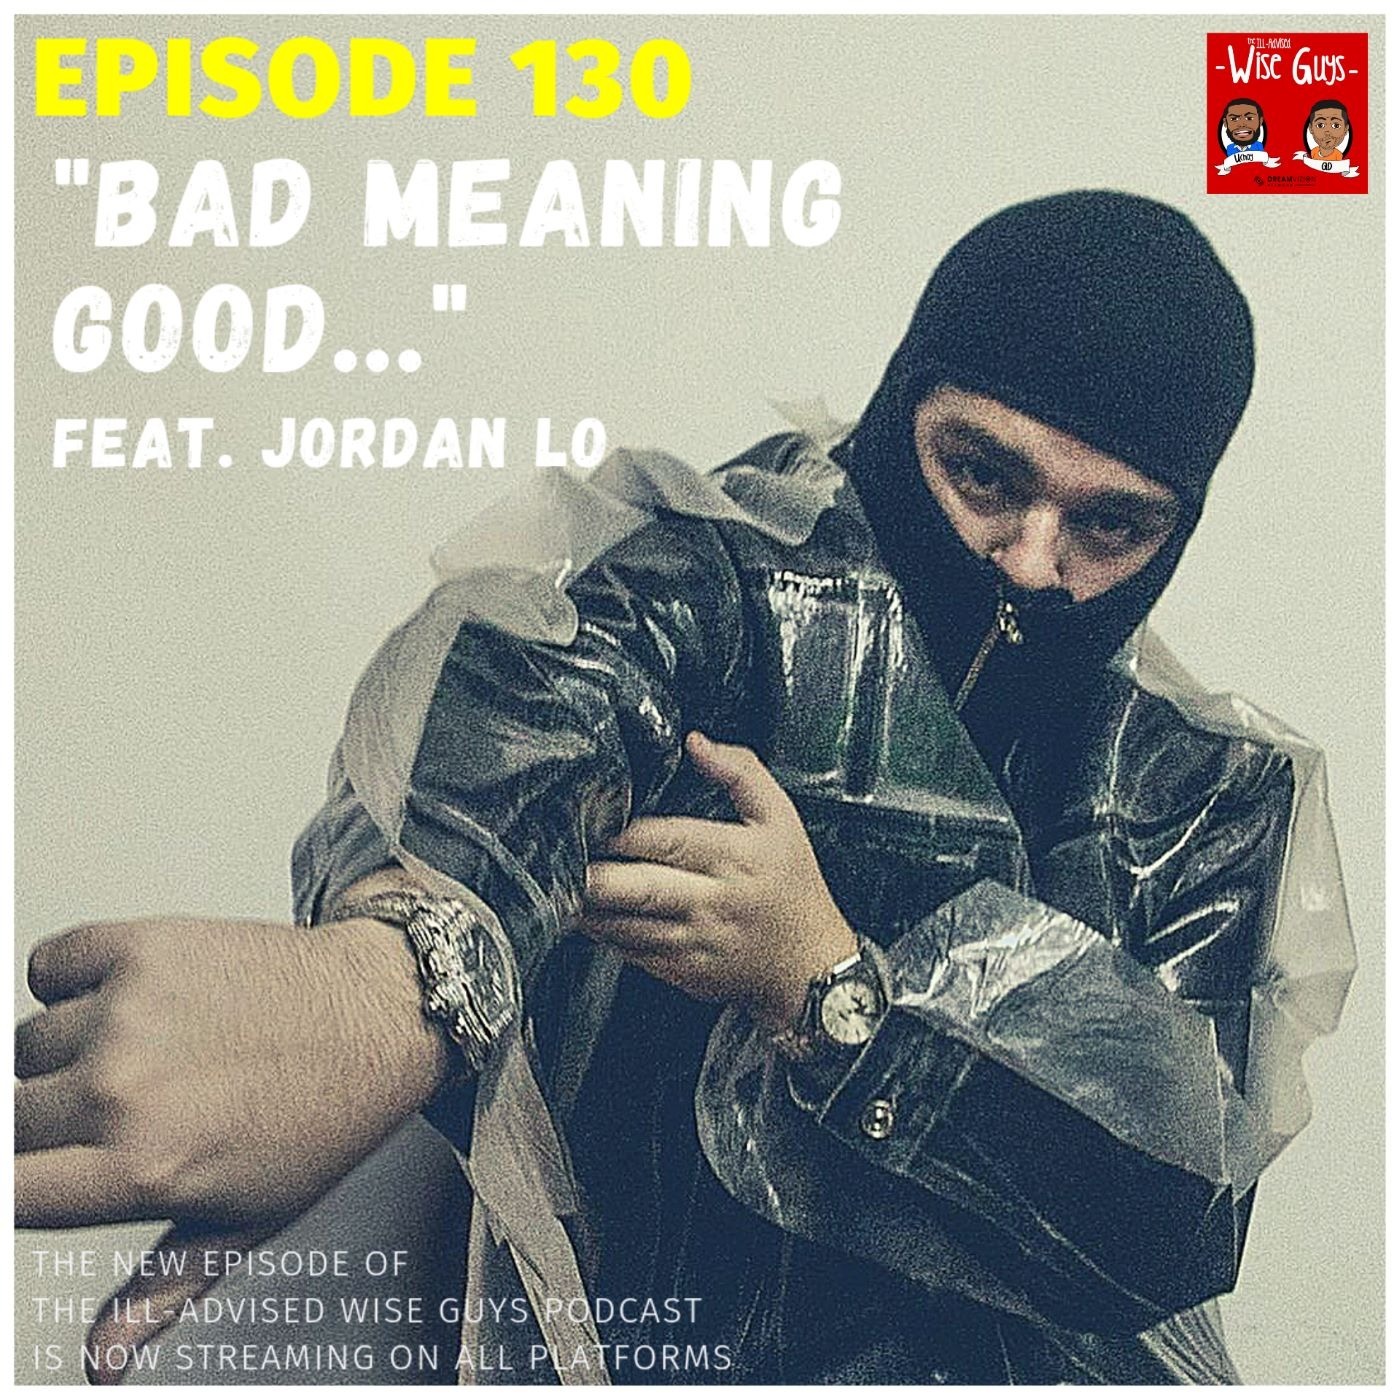 Episode 130 - "Bad Meaning Good..." (Feat. Jordan Lo)